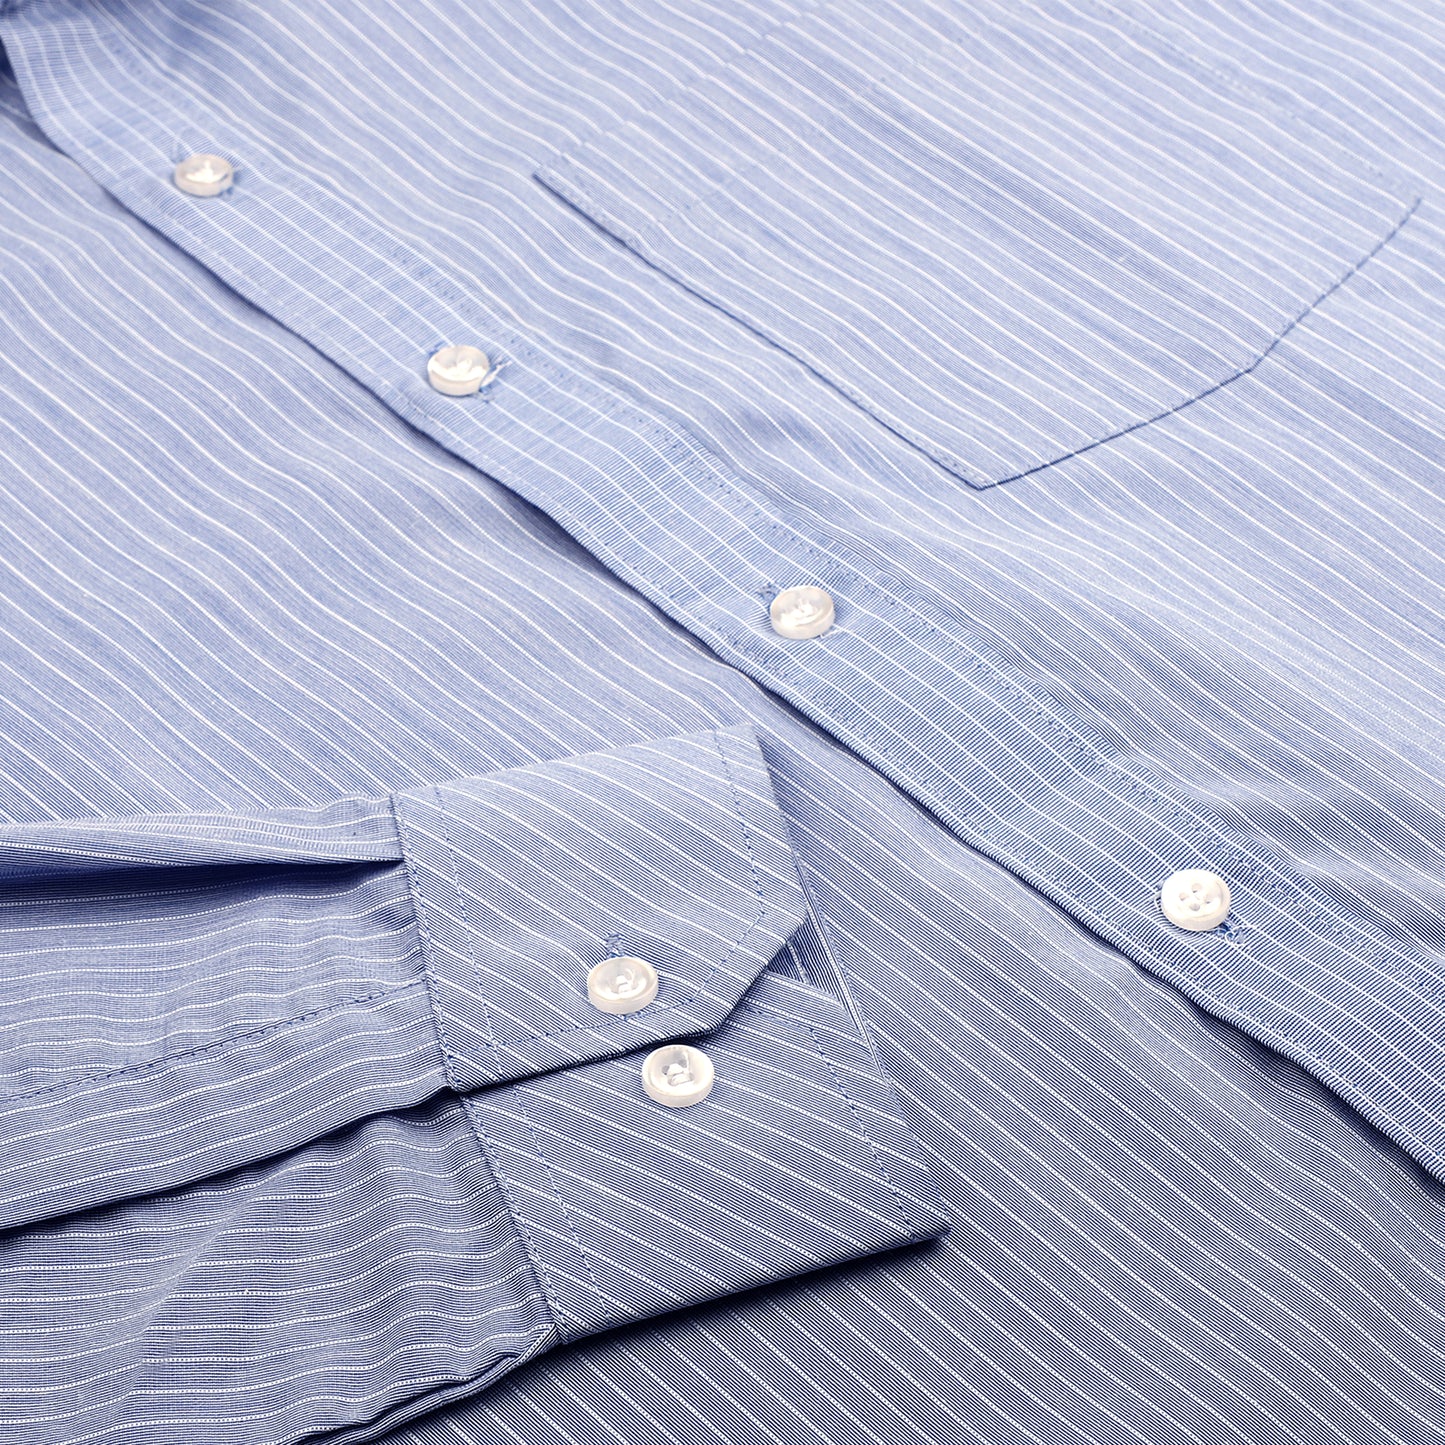 Prestige Blue Striped Men's Shirt